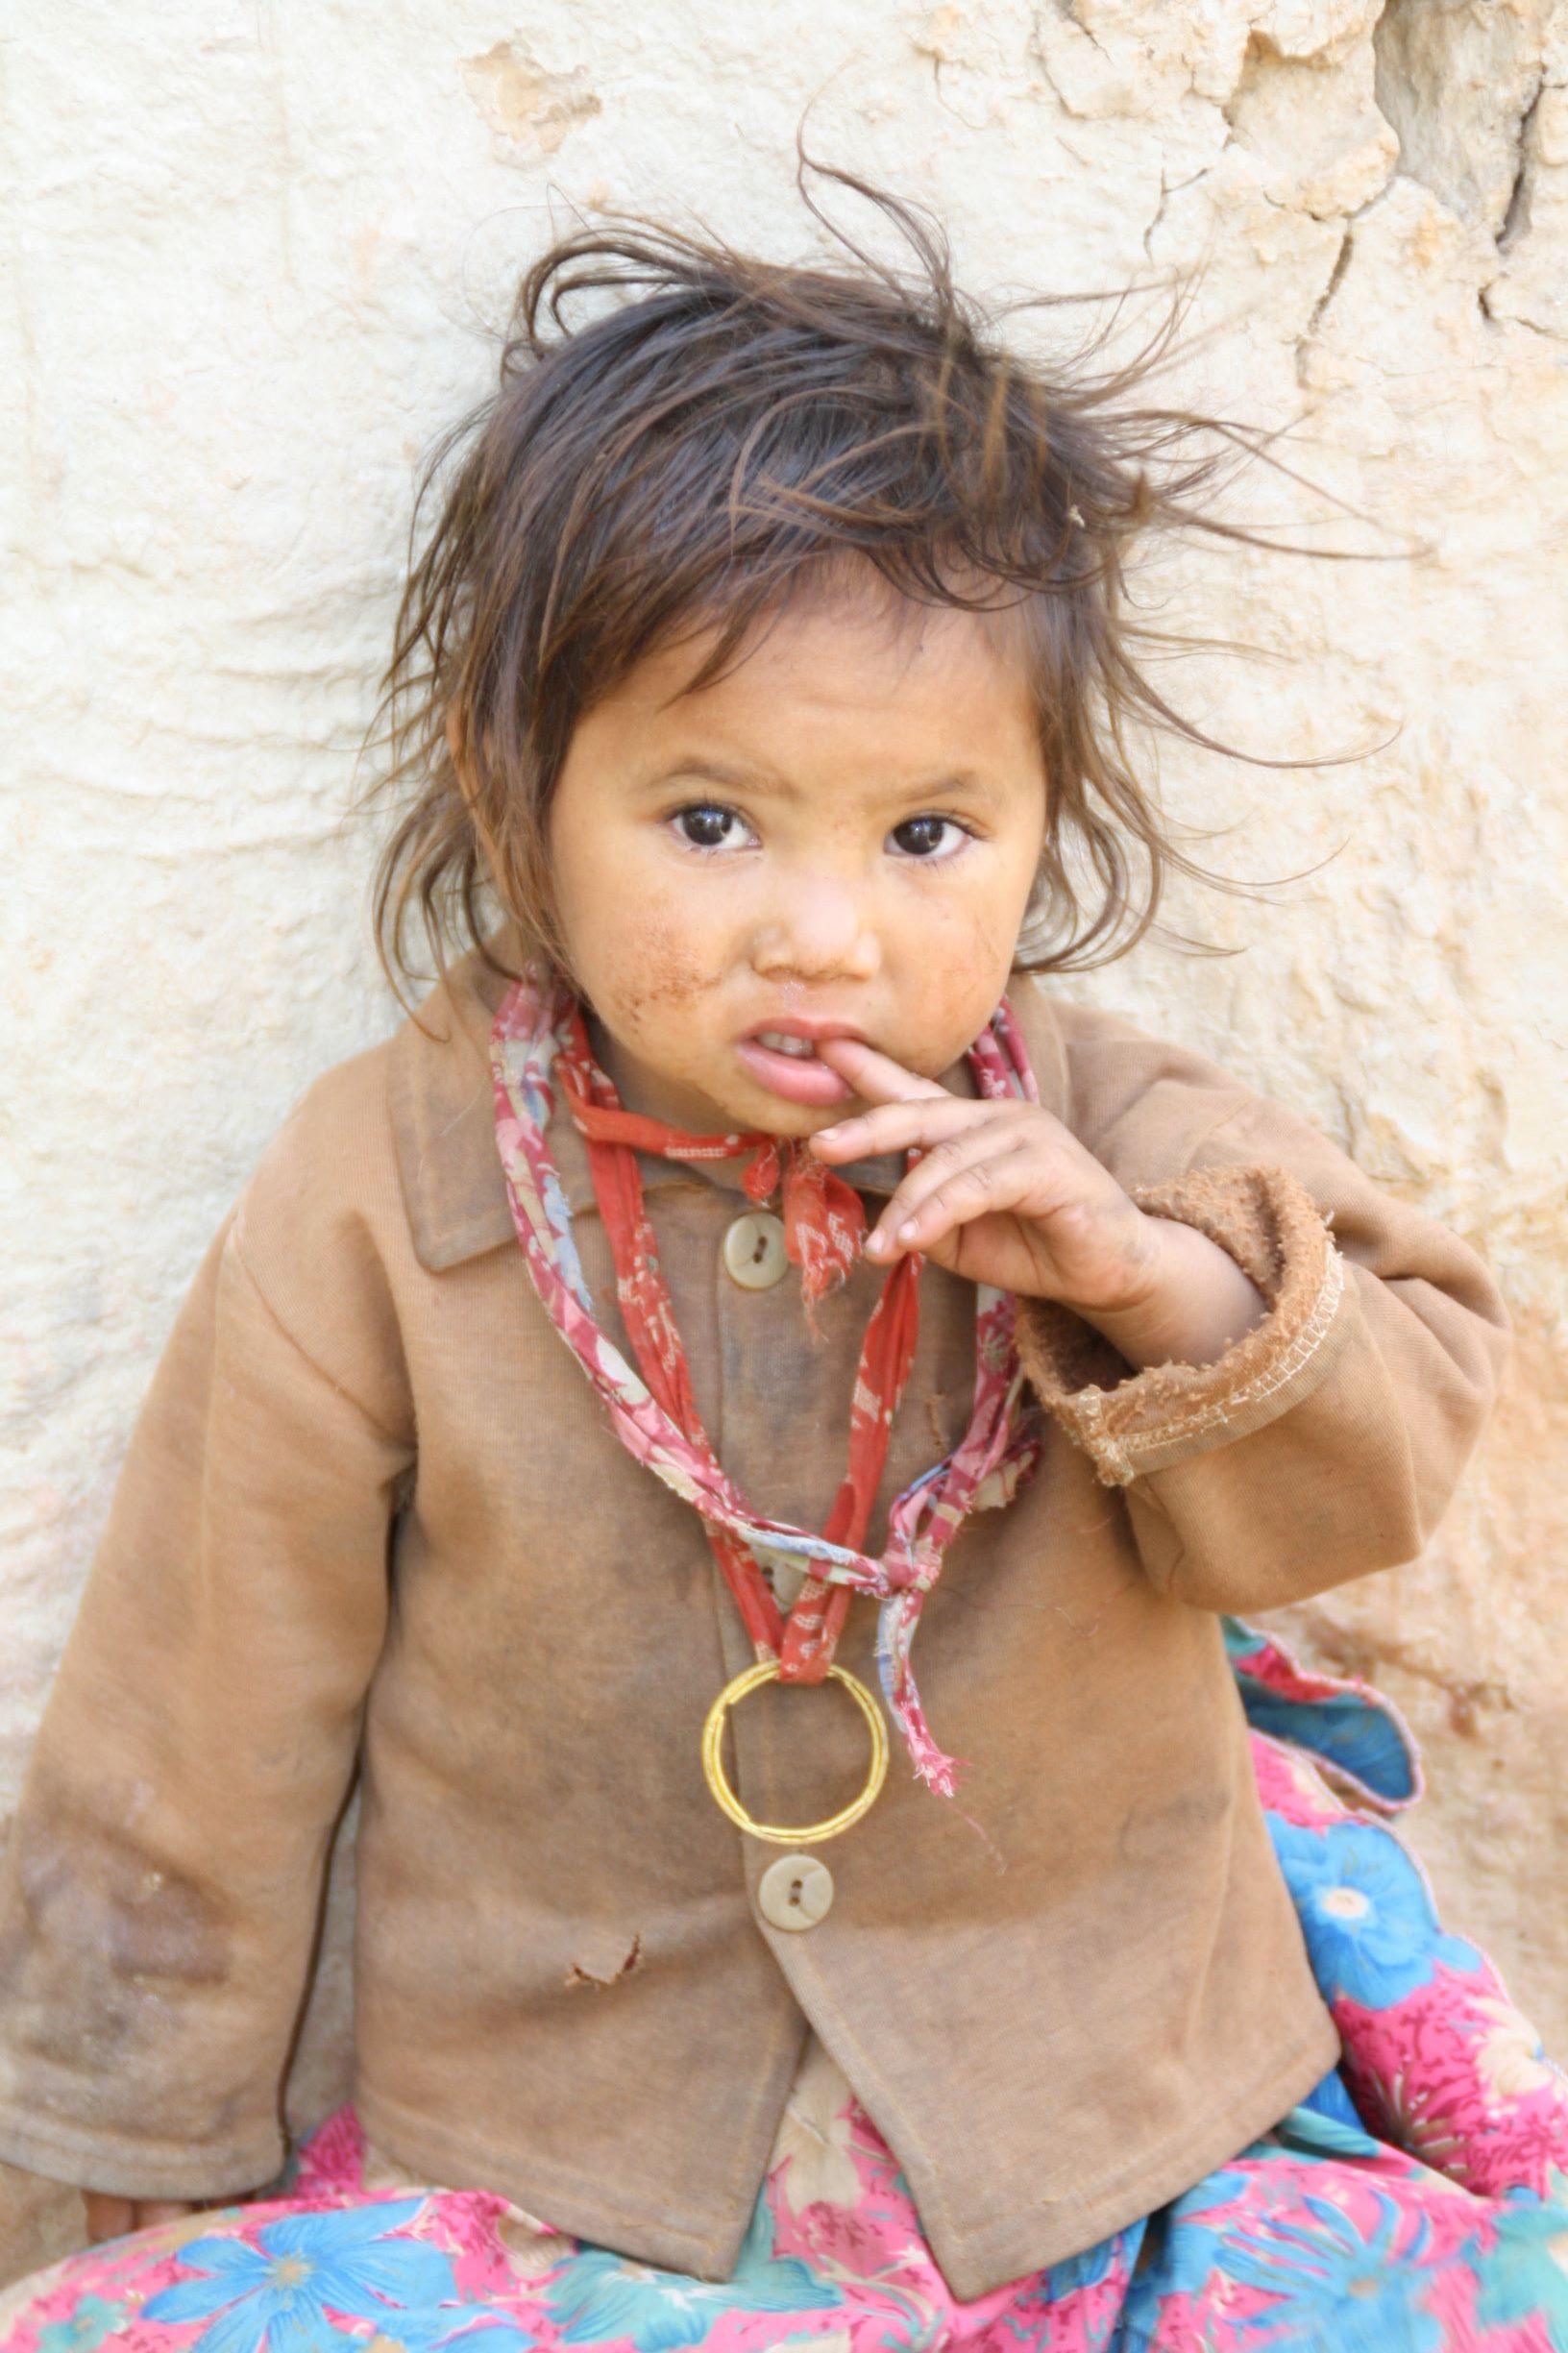 Child in Nepal